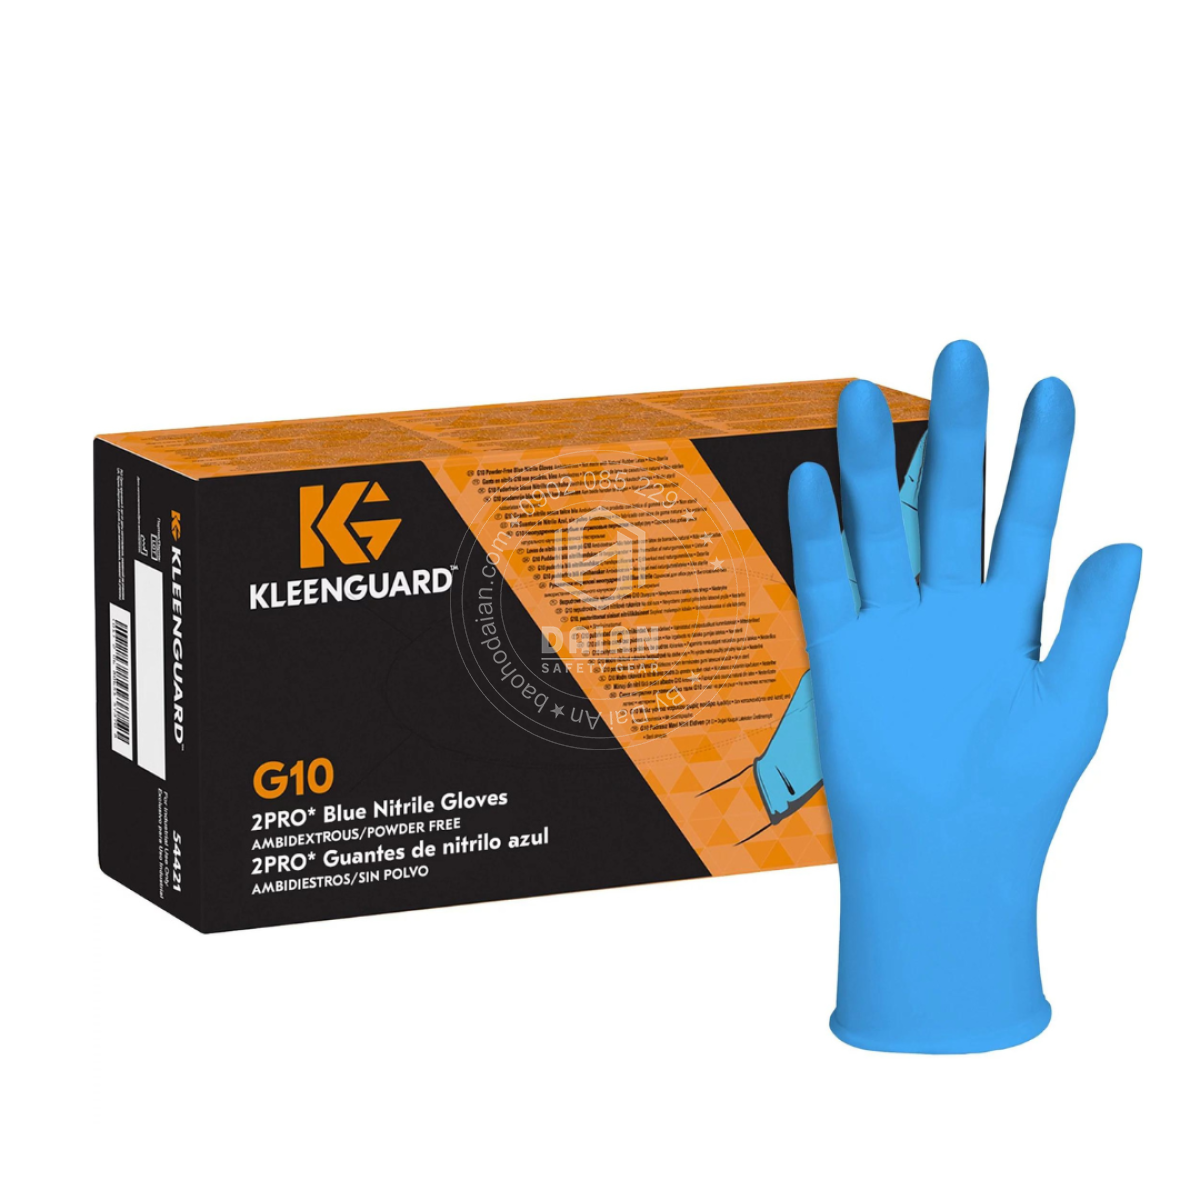 gang-tay-nitrile-kleenguard-g10-plex